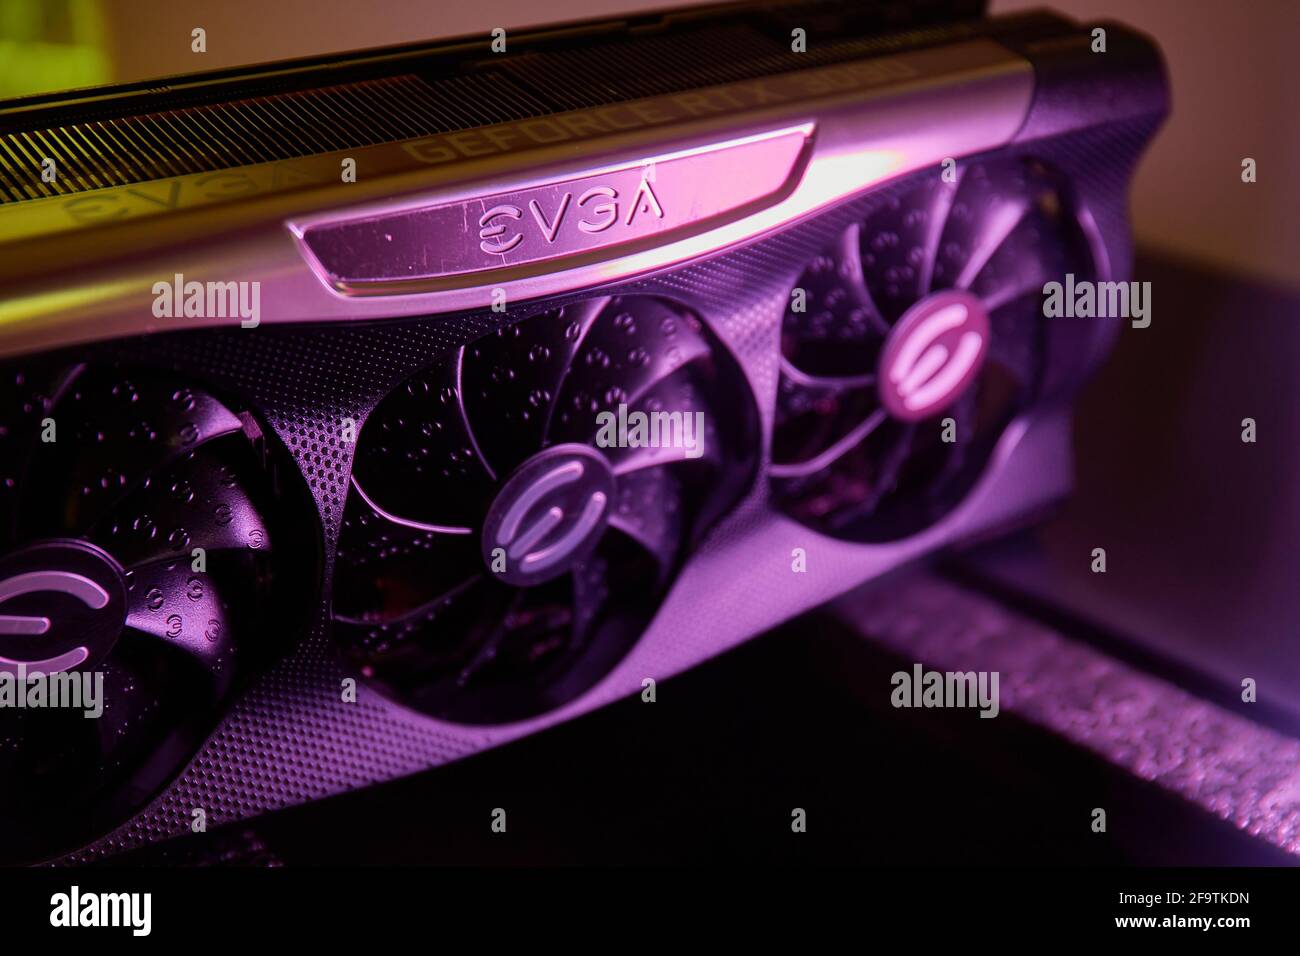 Geforce RTX 3090 Nvidia GPU graphics card inside a gaming computer configuration Stock Photo